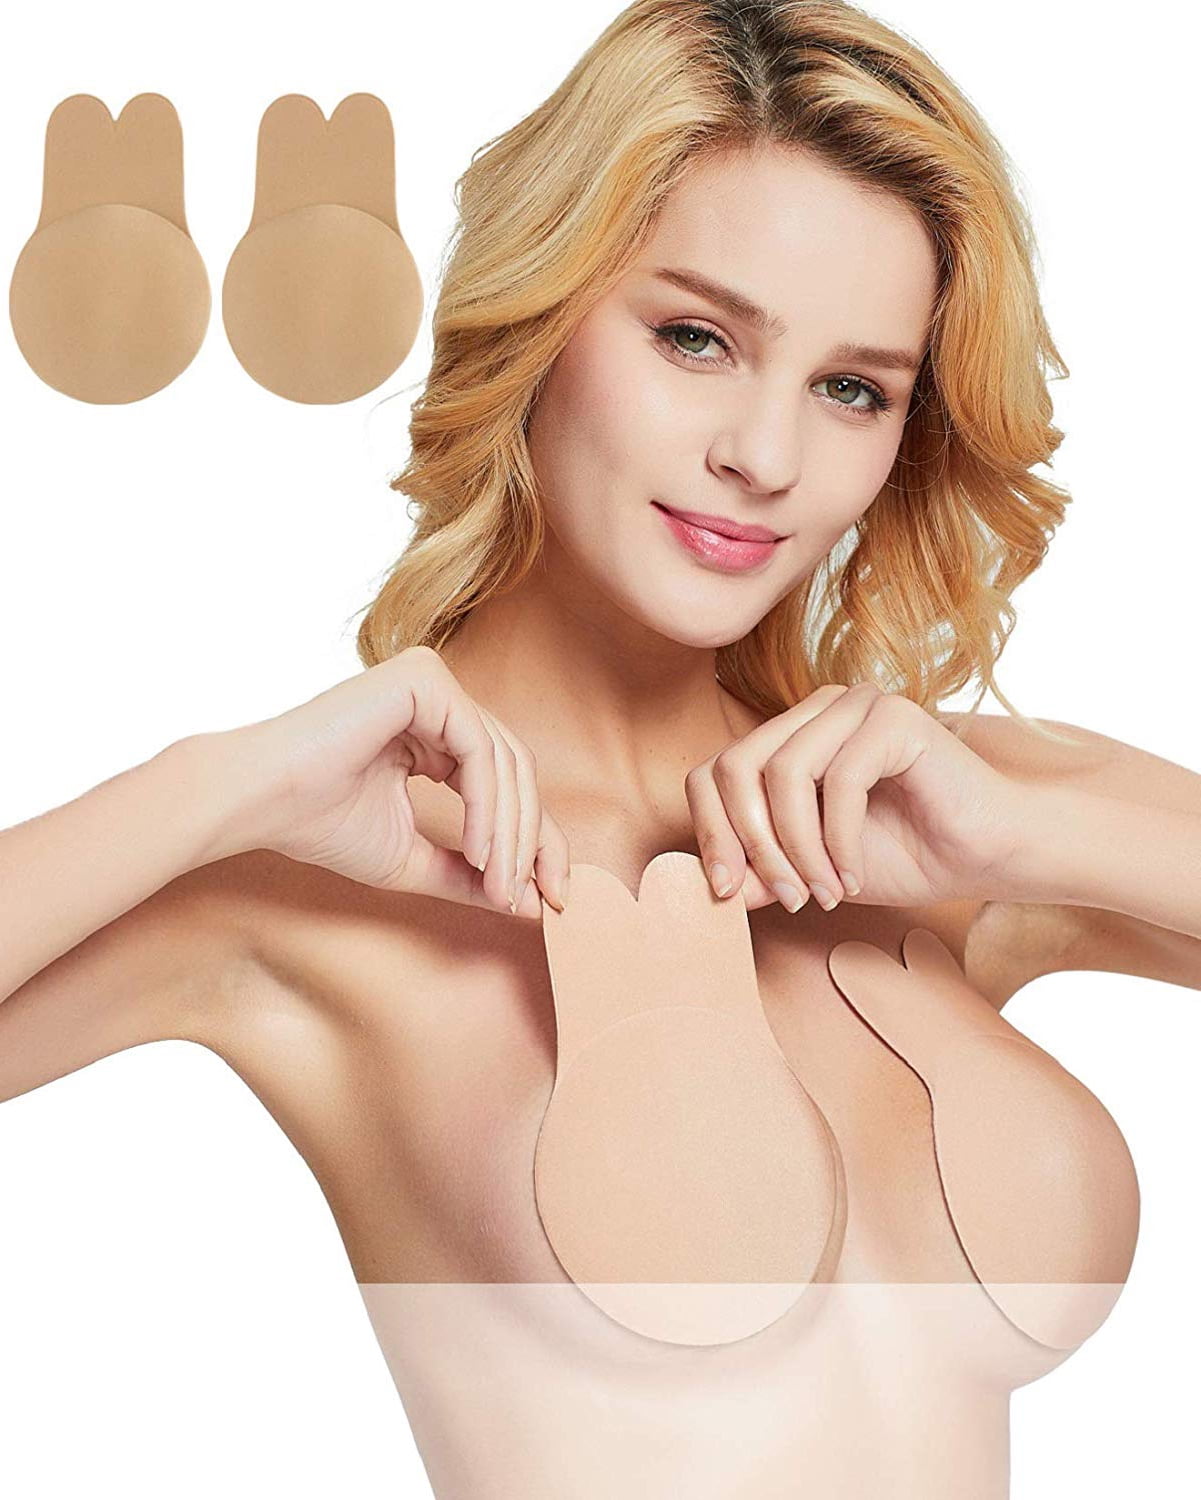 Adhesive Bra Breast Lift Strapless Breast Lift Nipplecovers